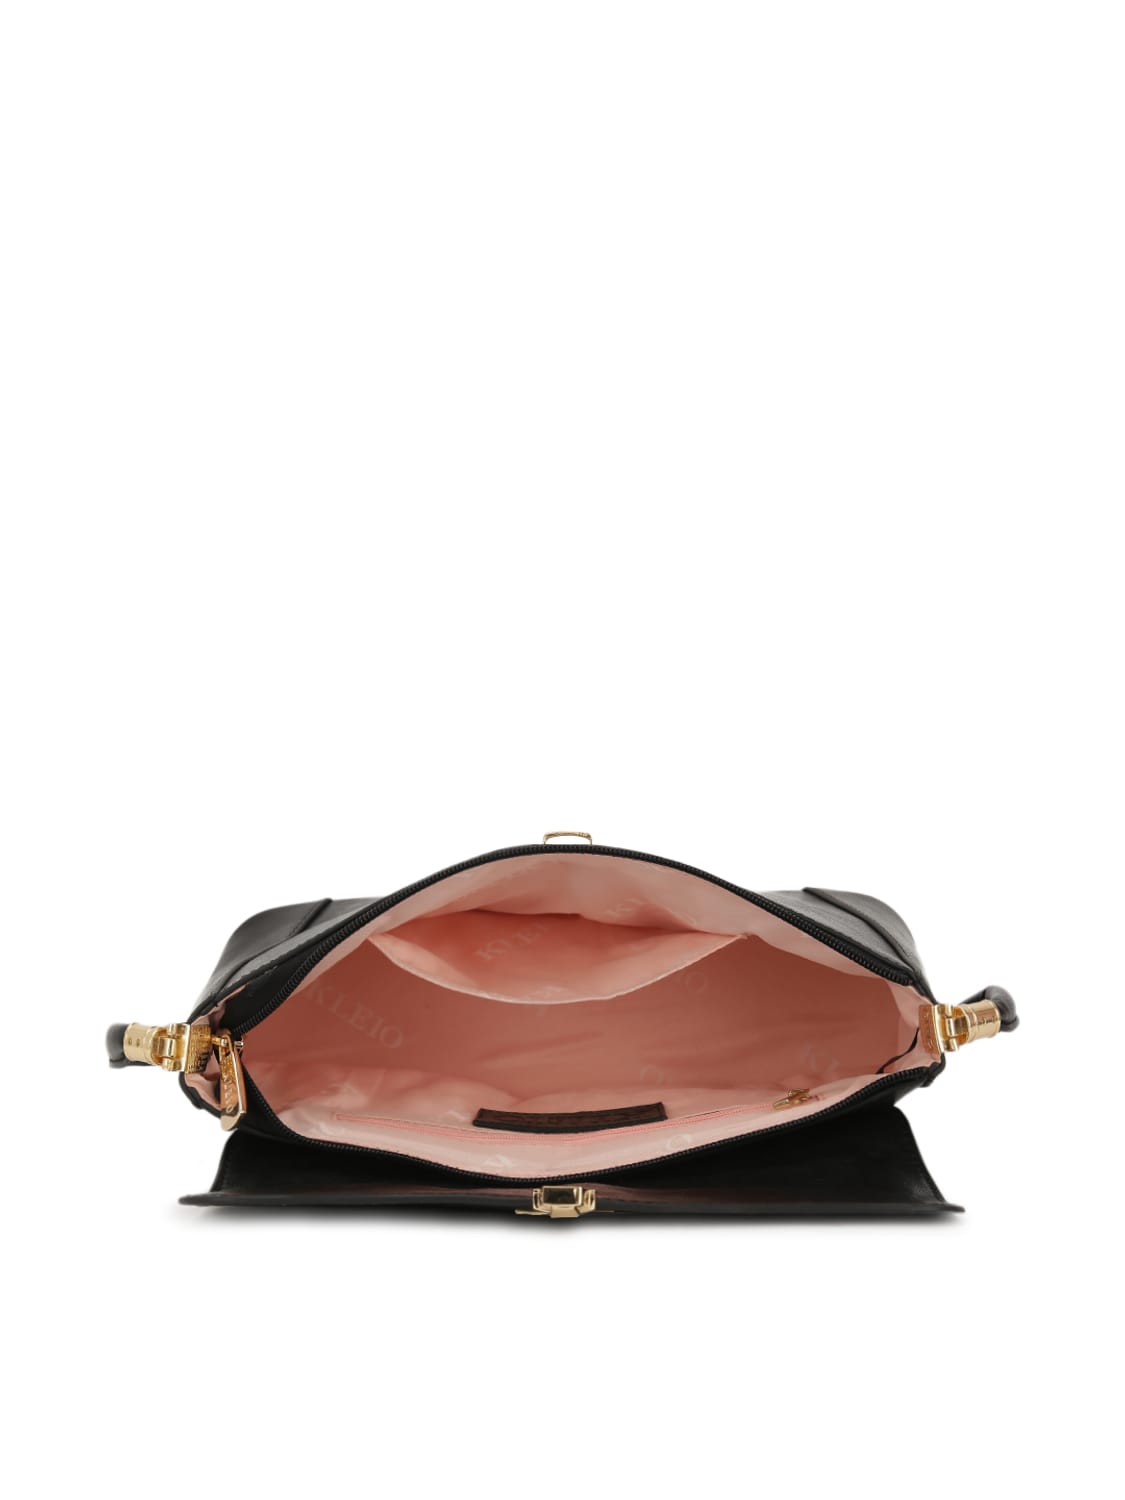 Black Leather Top Handle Crossbody Small Satchel Bag Flap Handbags |  Baginning